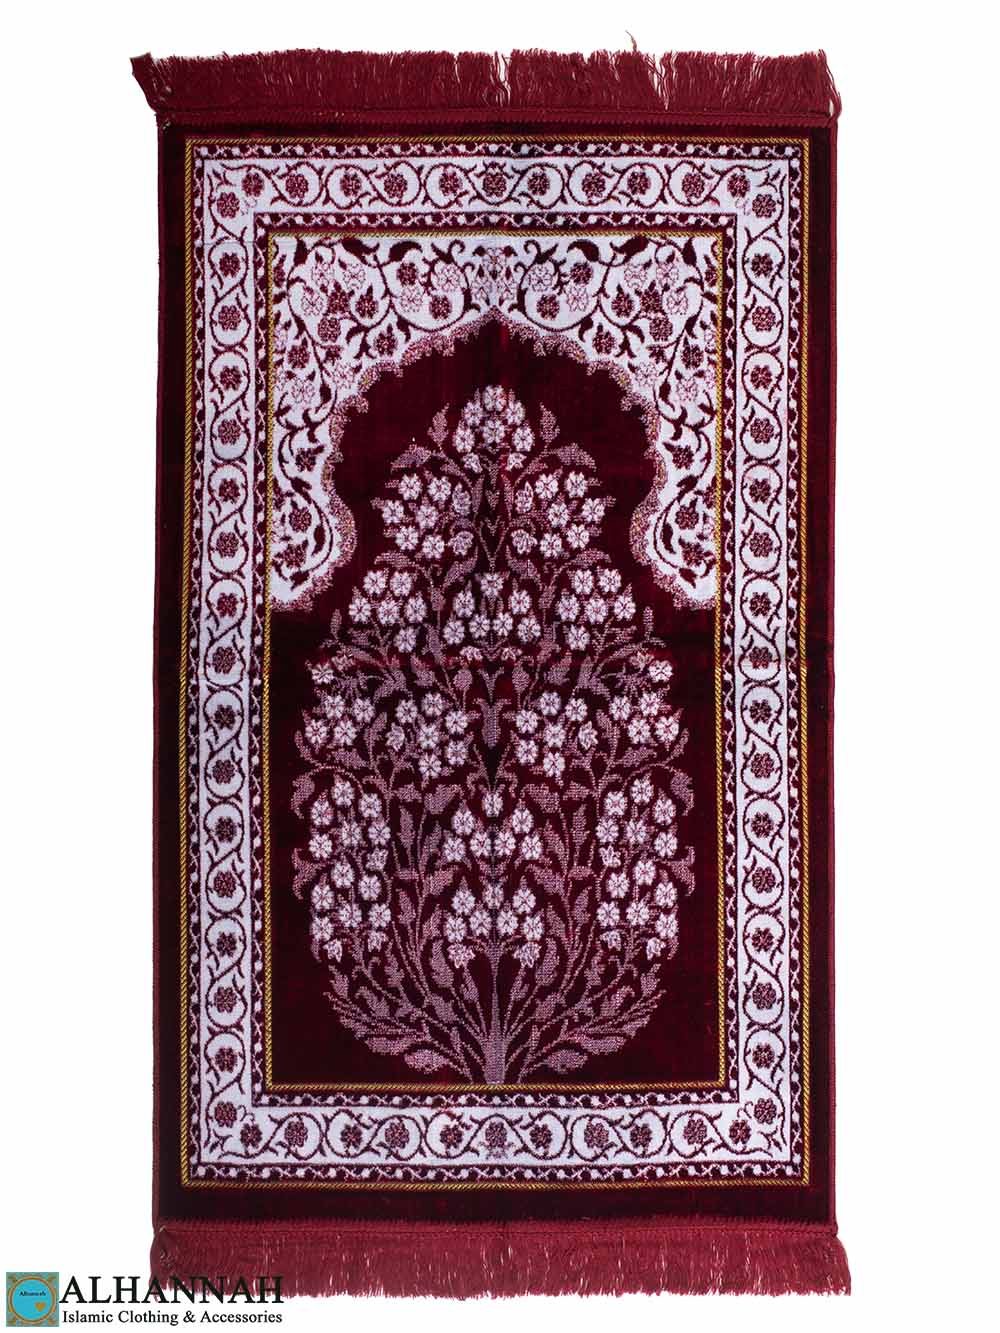 Turkish Prayer Rug with Floral Burst Motif - Raspberry ii1681